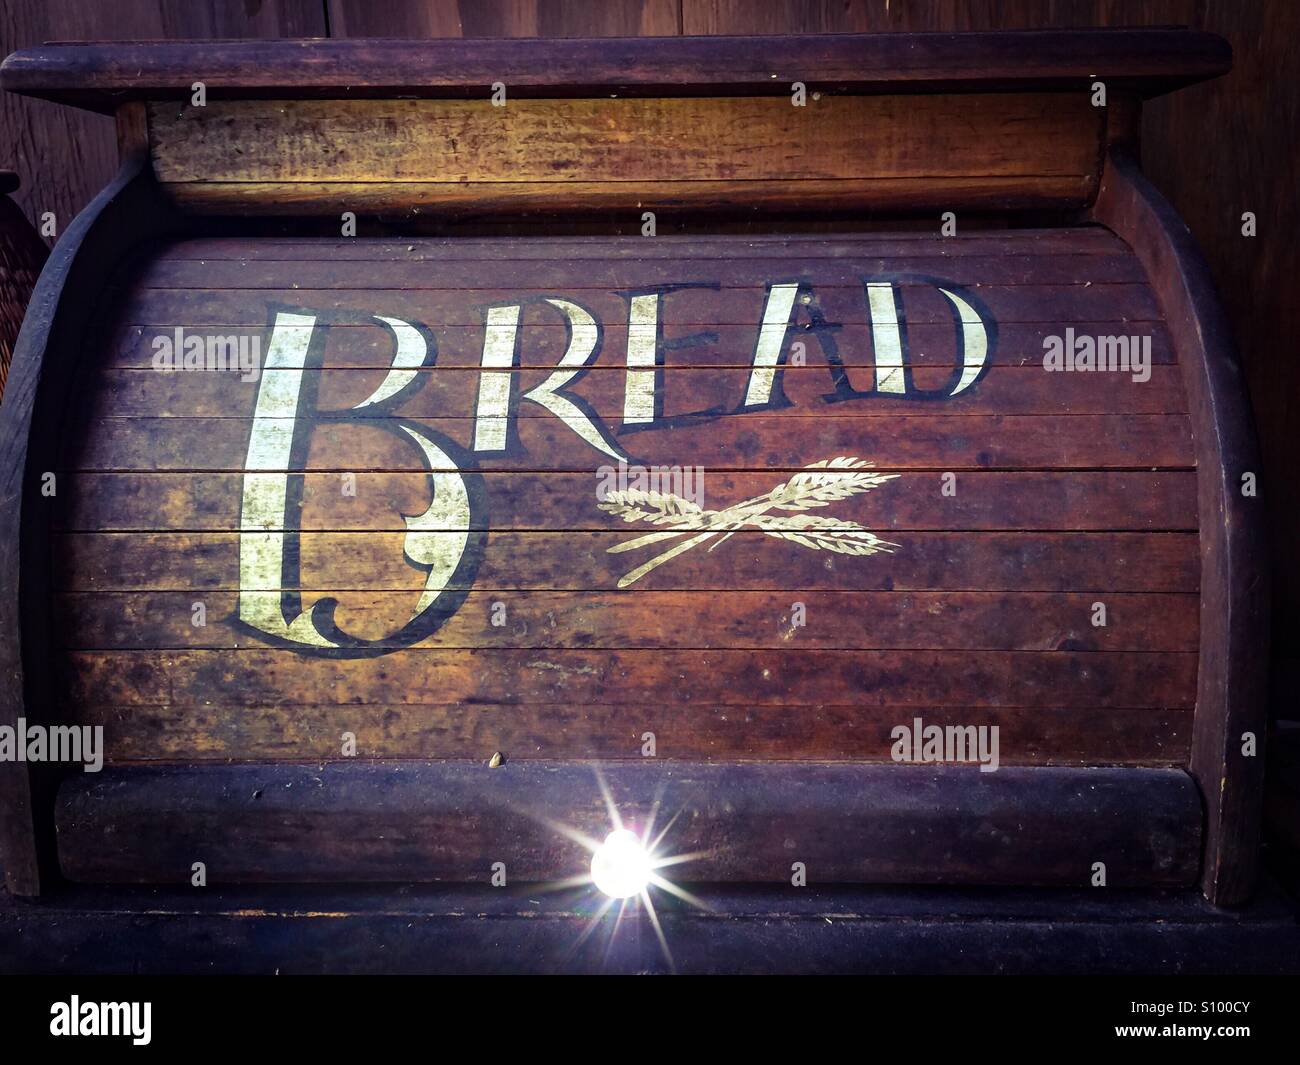 Large Rustic Bread Box  Vintage Amish Countertop Storage